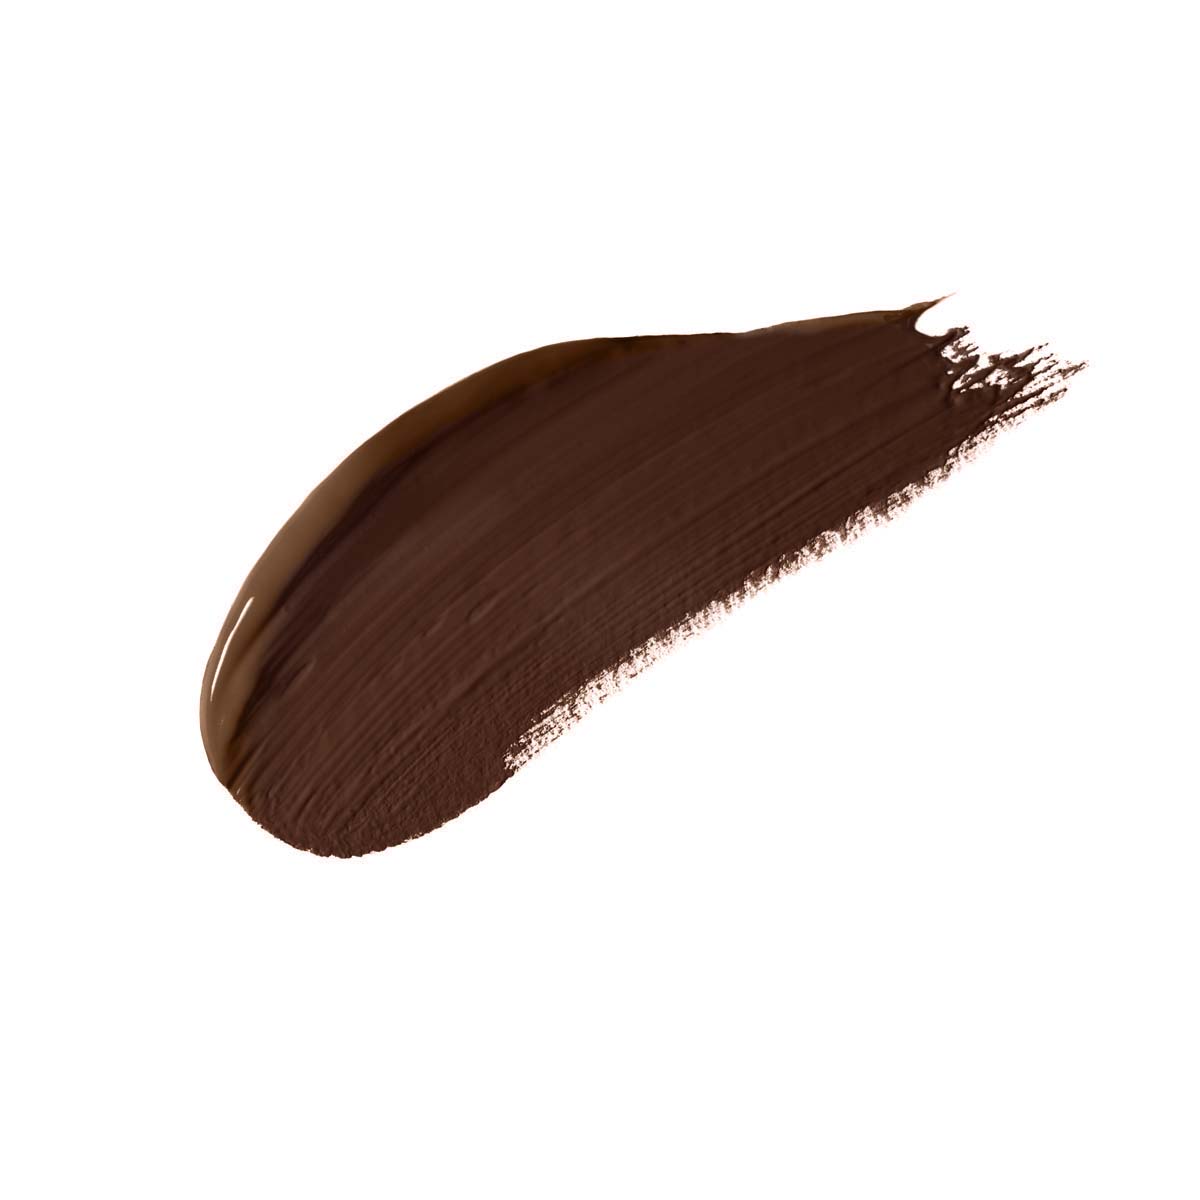 18 - DEEP CHOCOLATE / NEUTRAL - medium to full coverage foundation in deep chocolate neutral undertone shade eighteen